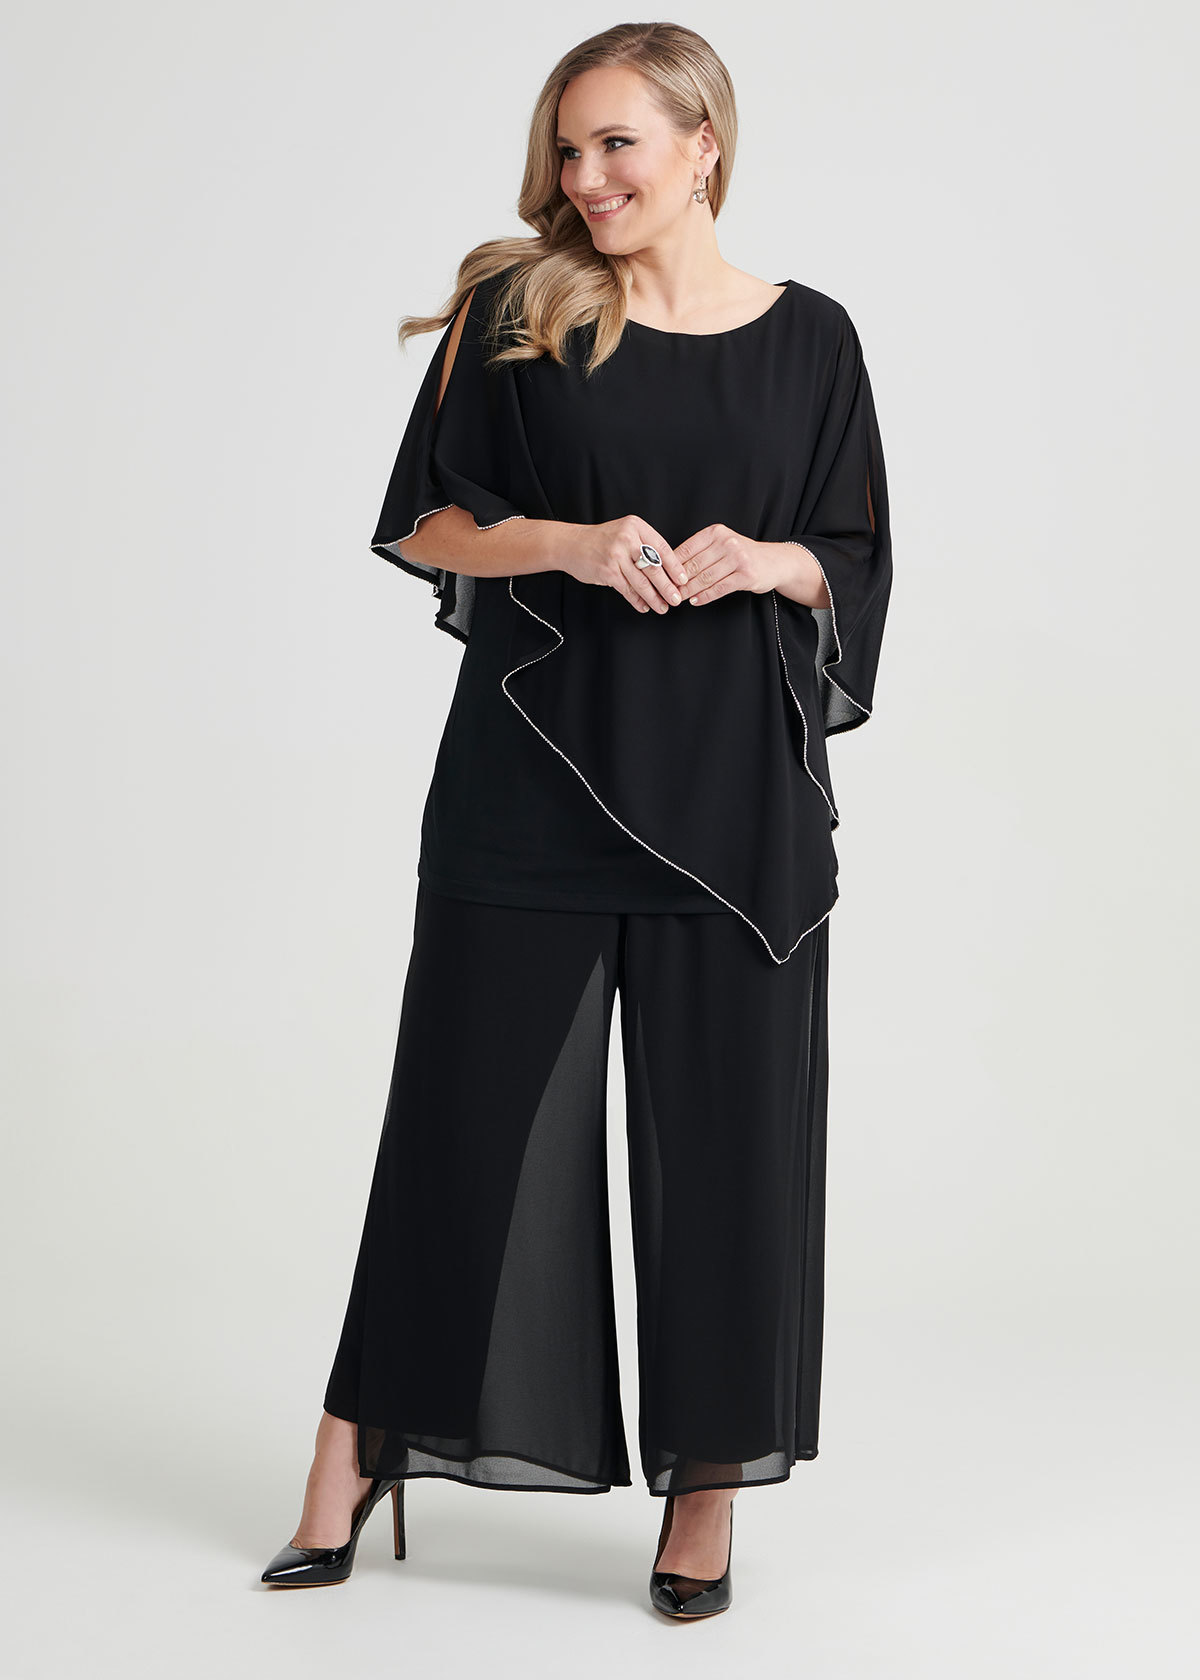 Shop Plus Size Alice Diamonte Top in Black | Taking Shape AU